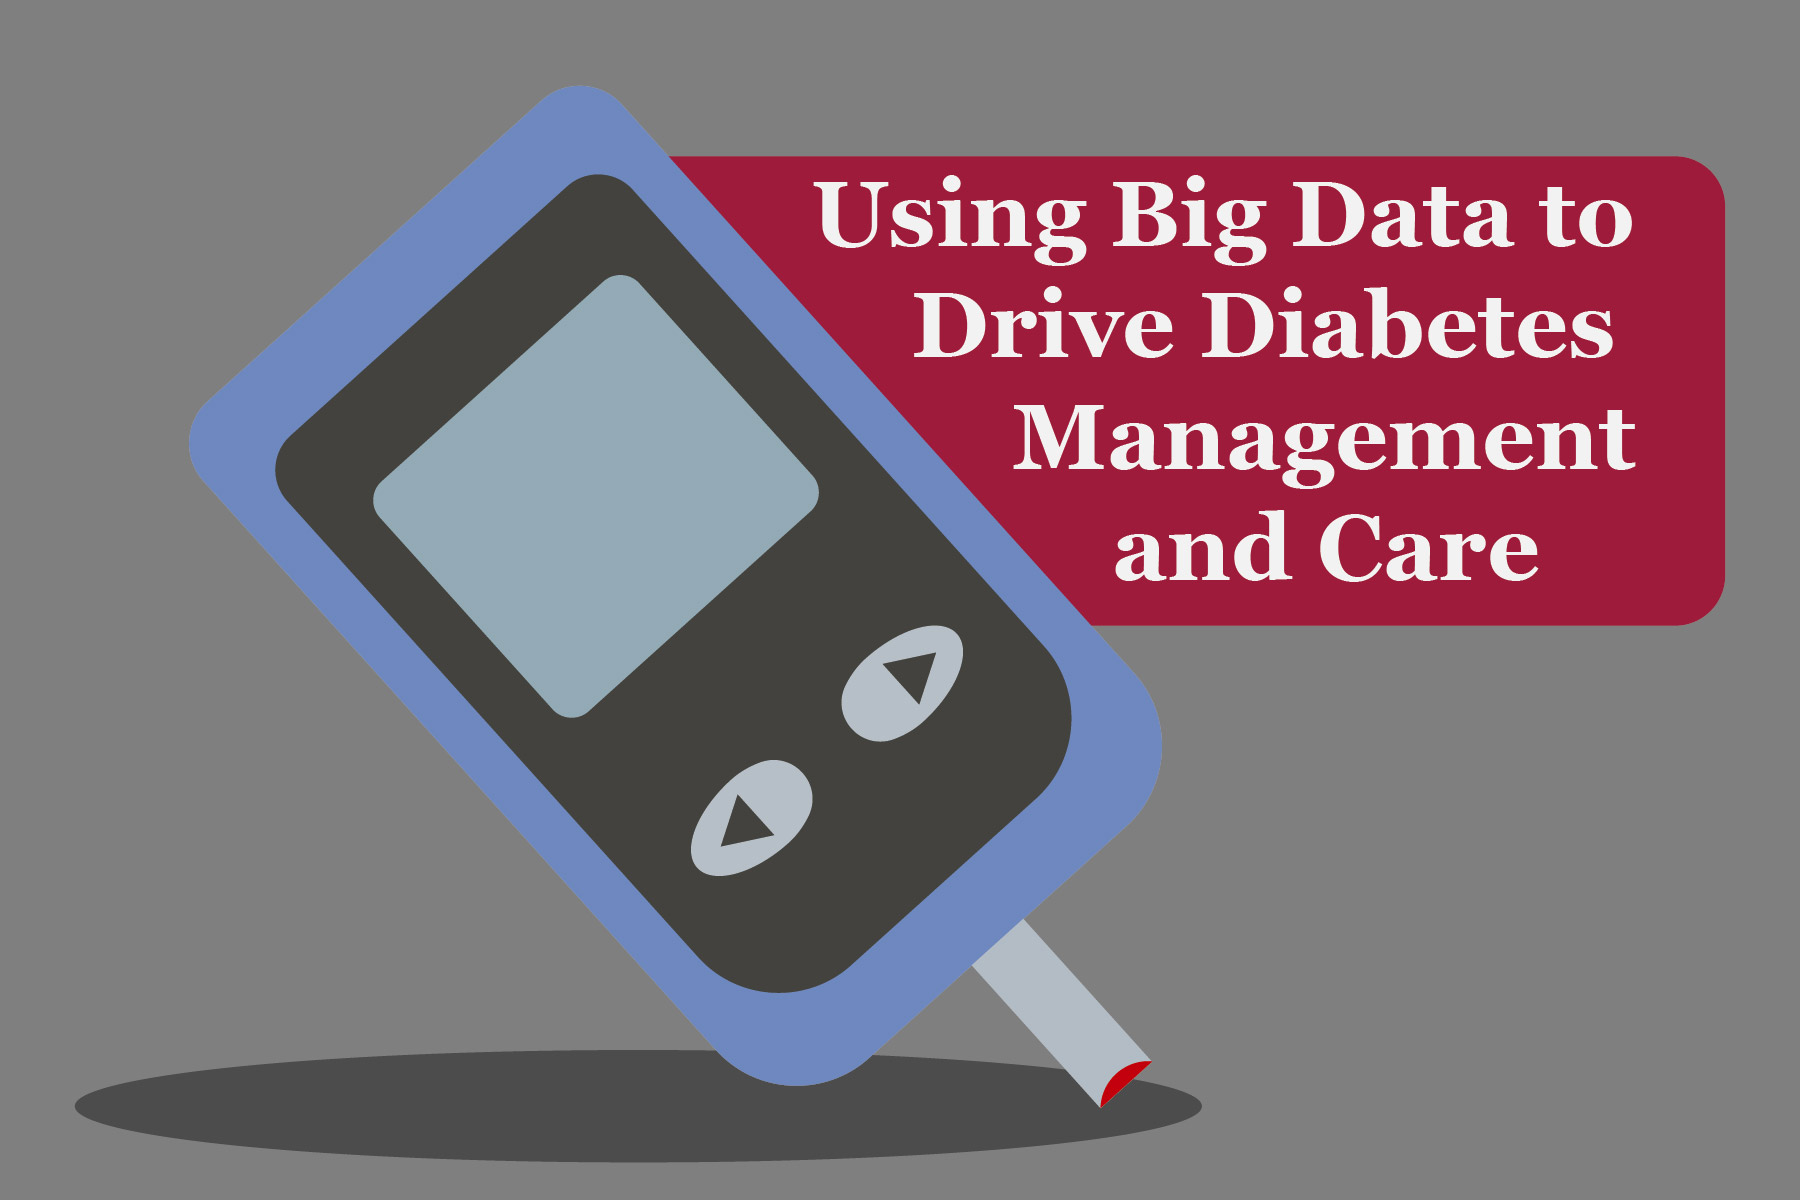 diabetic medical devices using digital health big data